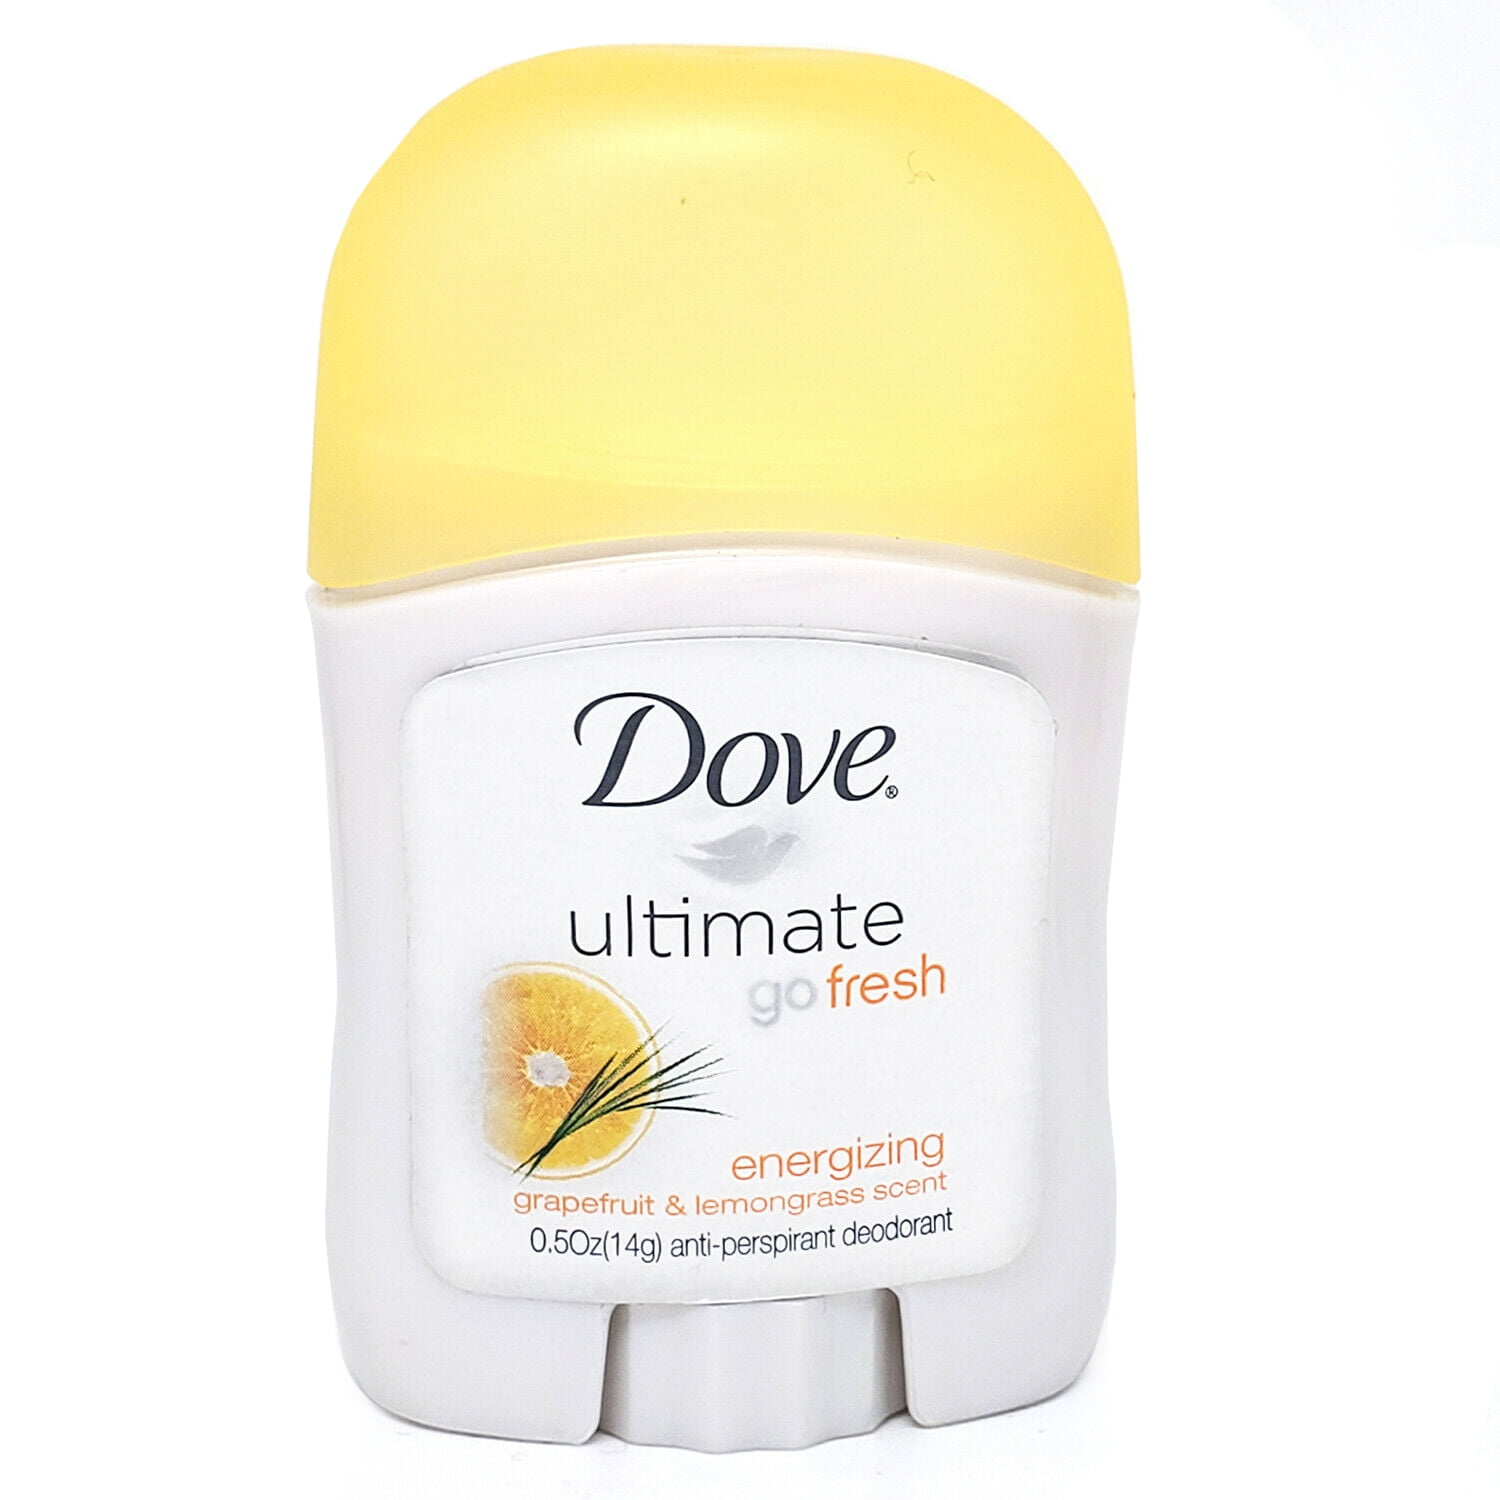 Dove Go Grapefruit & Lemongrass for Men & Women, Travel Size .5 Ounce - Walmart.com